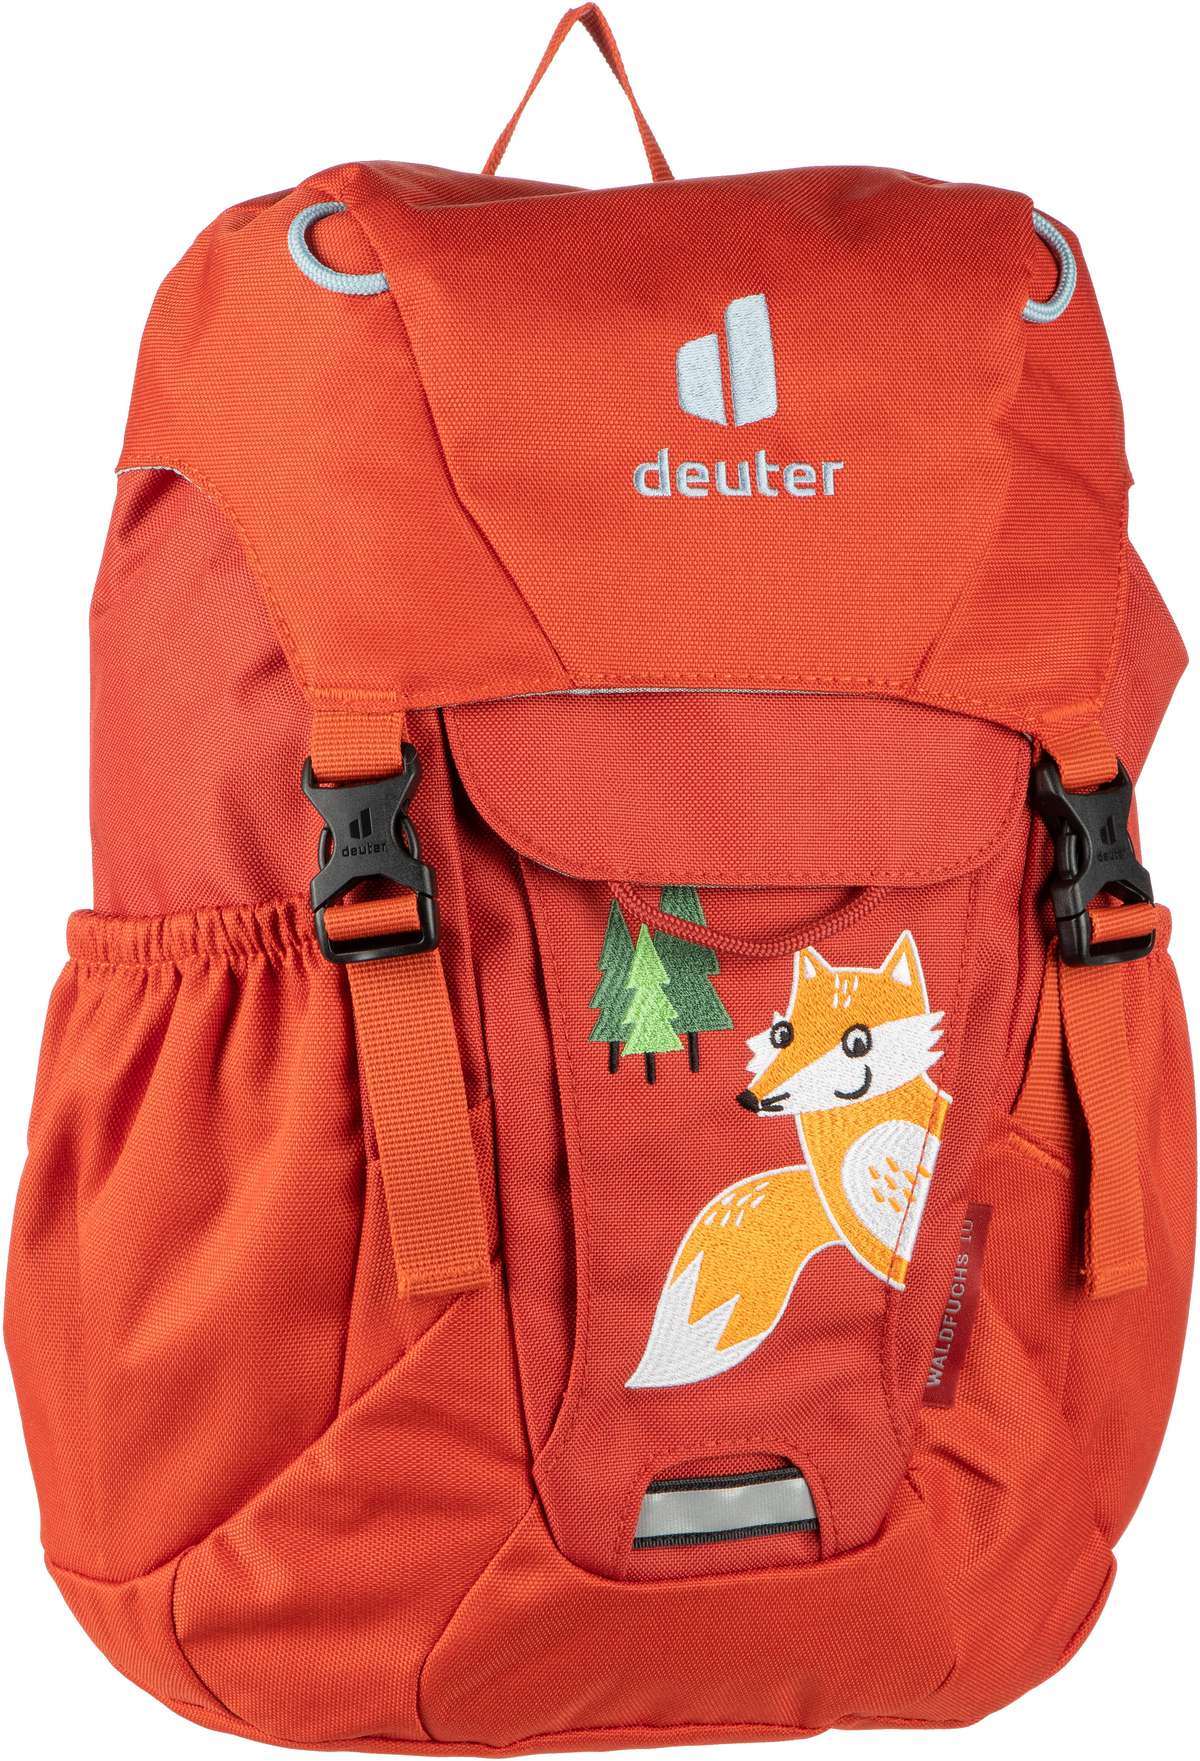 Deuter Waldfuchs 14  in Orange (14 Liter), Rucksack / Backpack